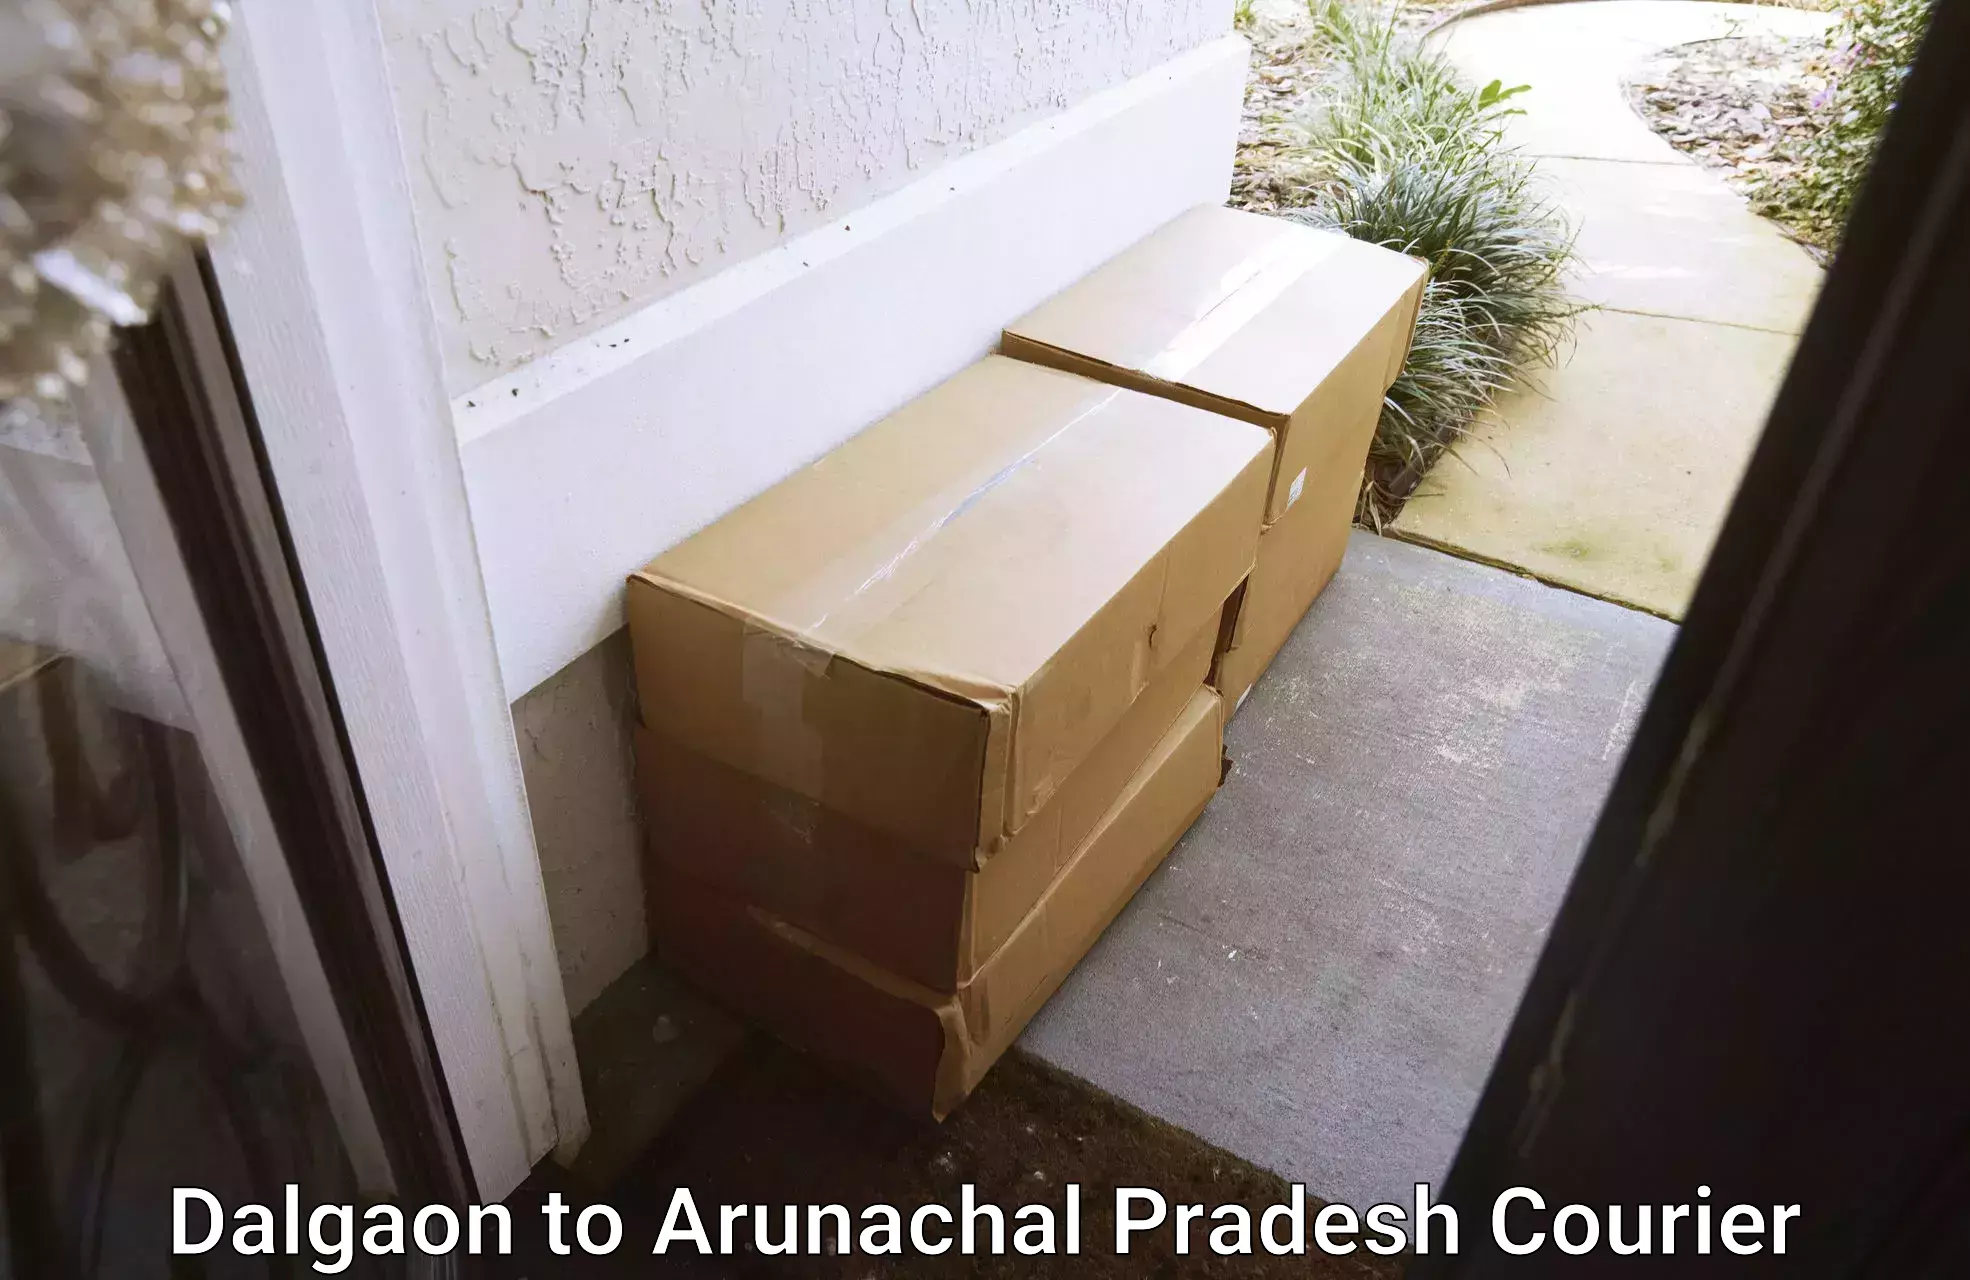 Cash on delivery service Dalgaon to Arunachal Pradesh